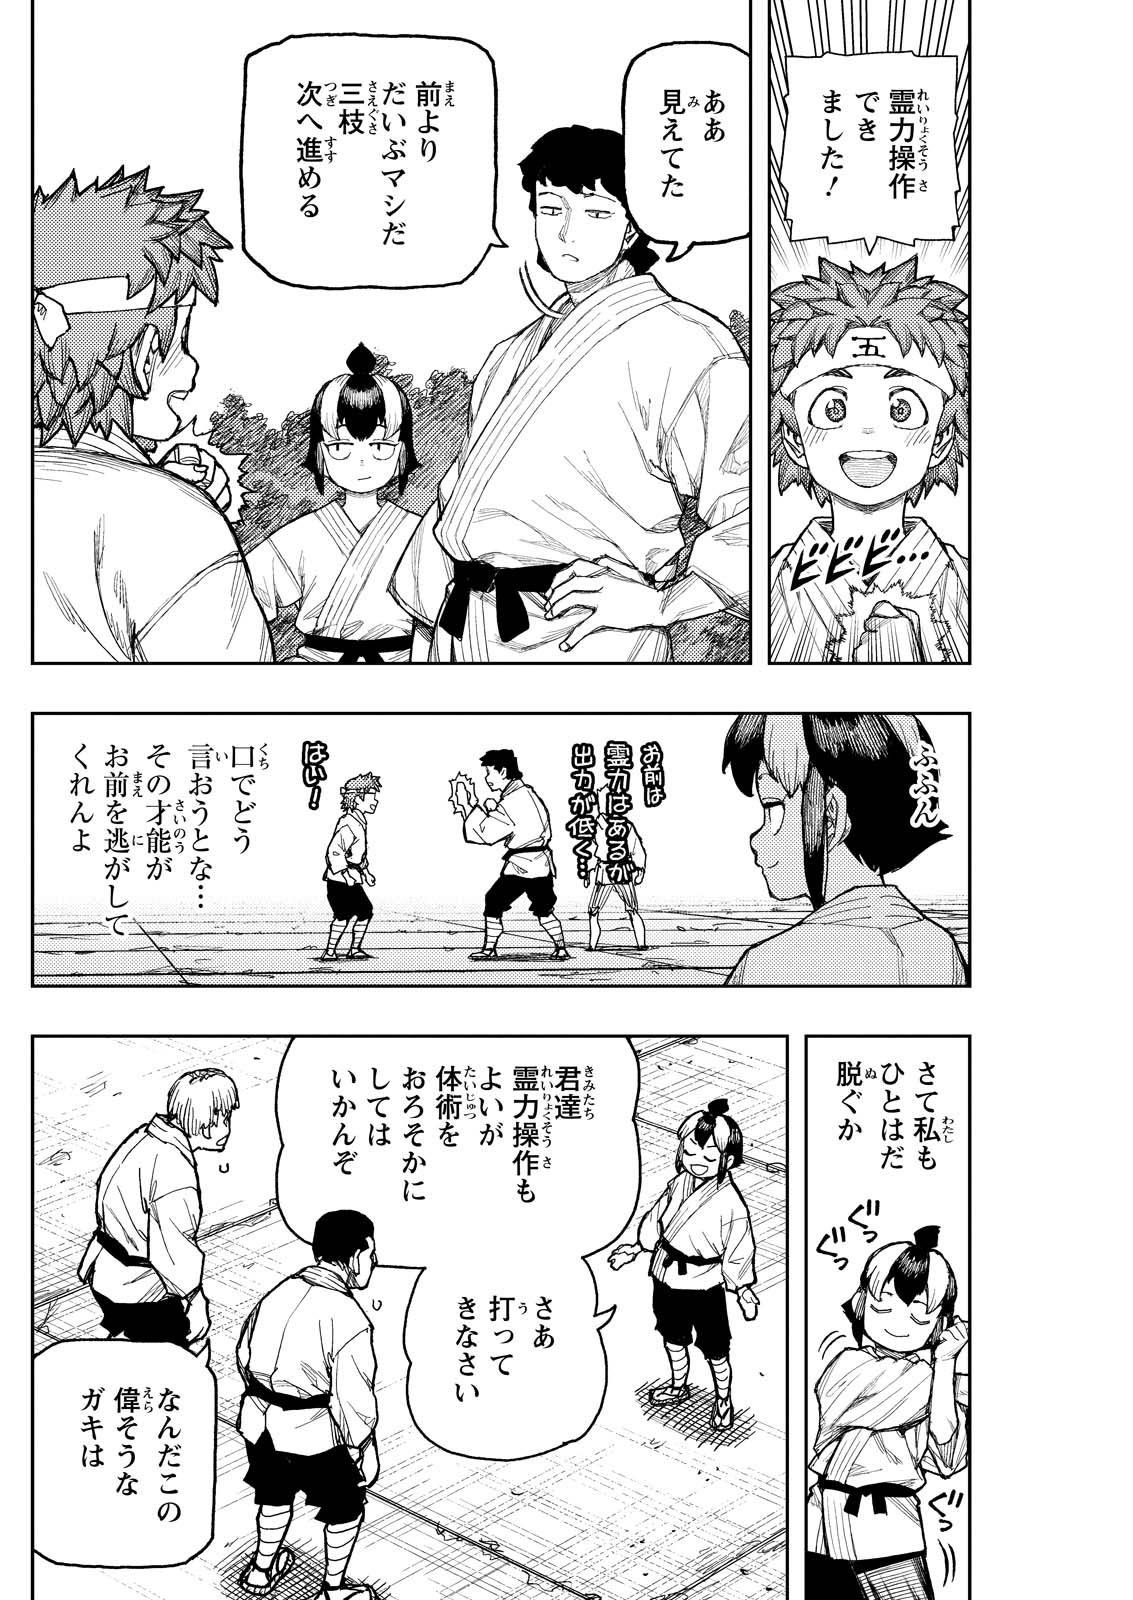 Tsugumomo - Chapter 169 - Page 18